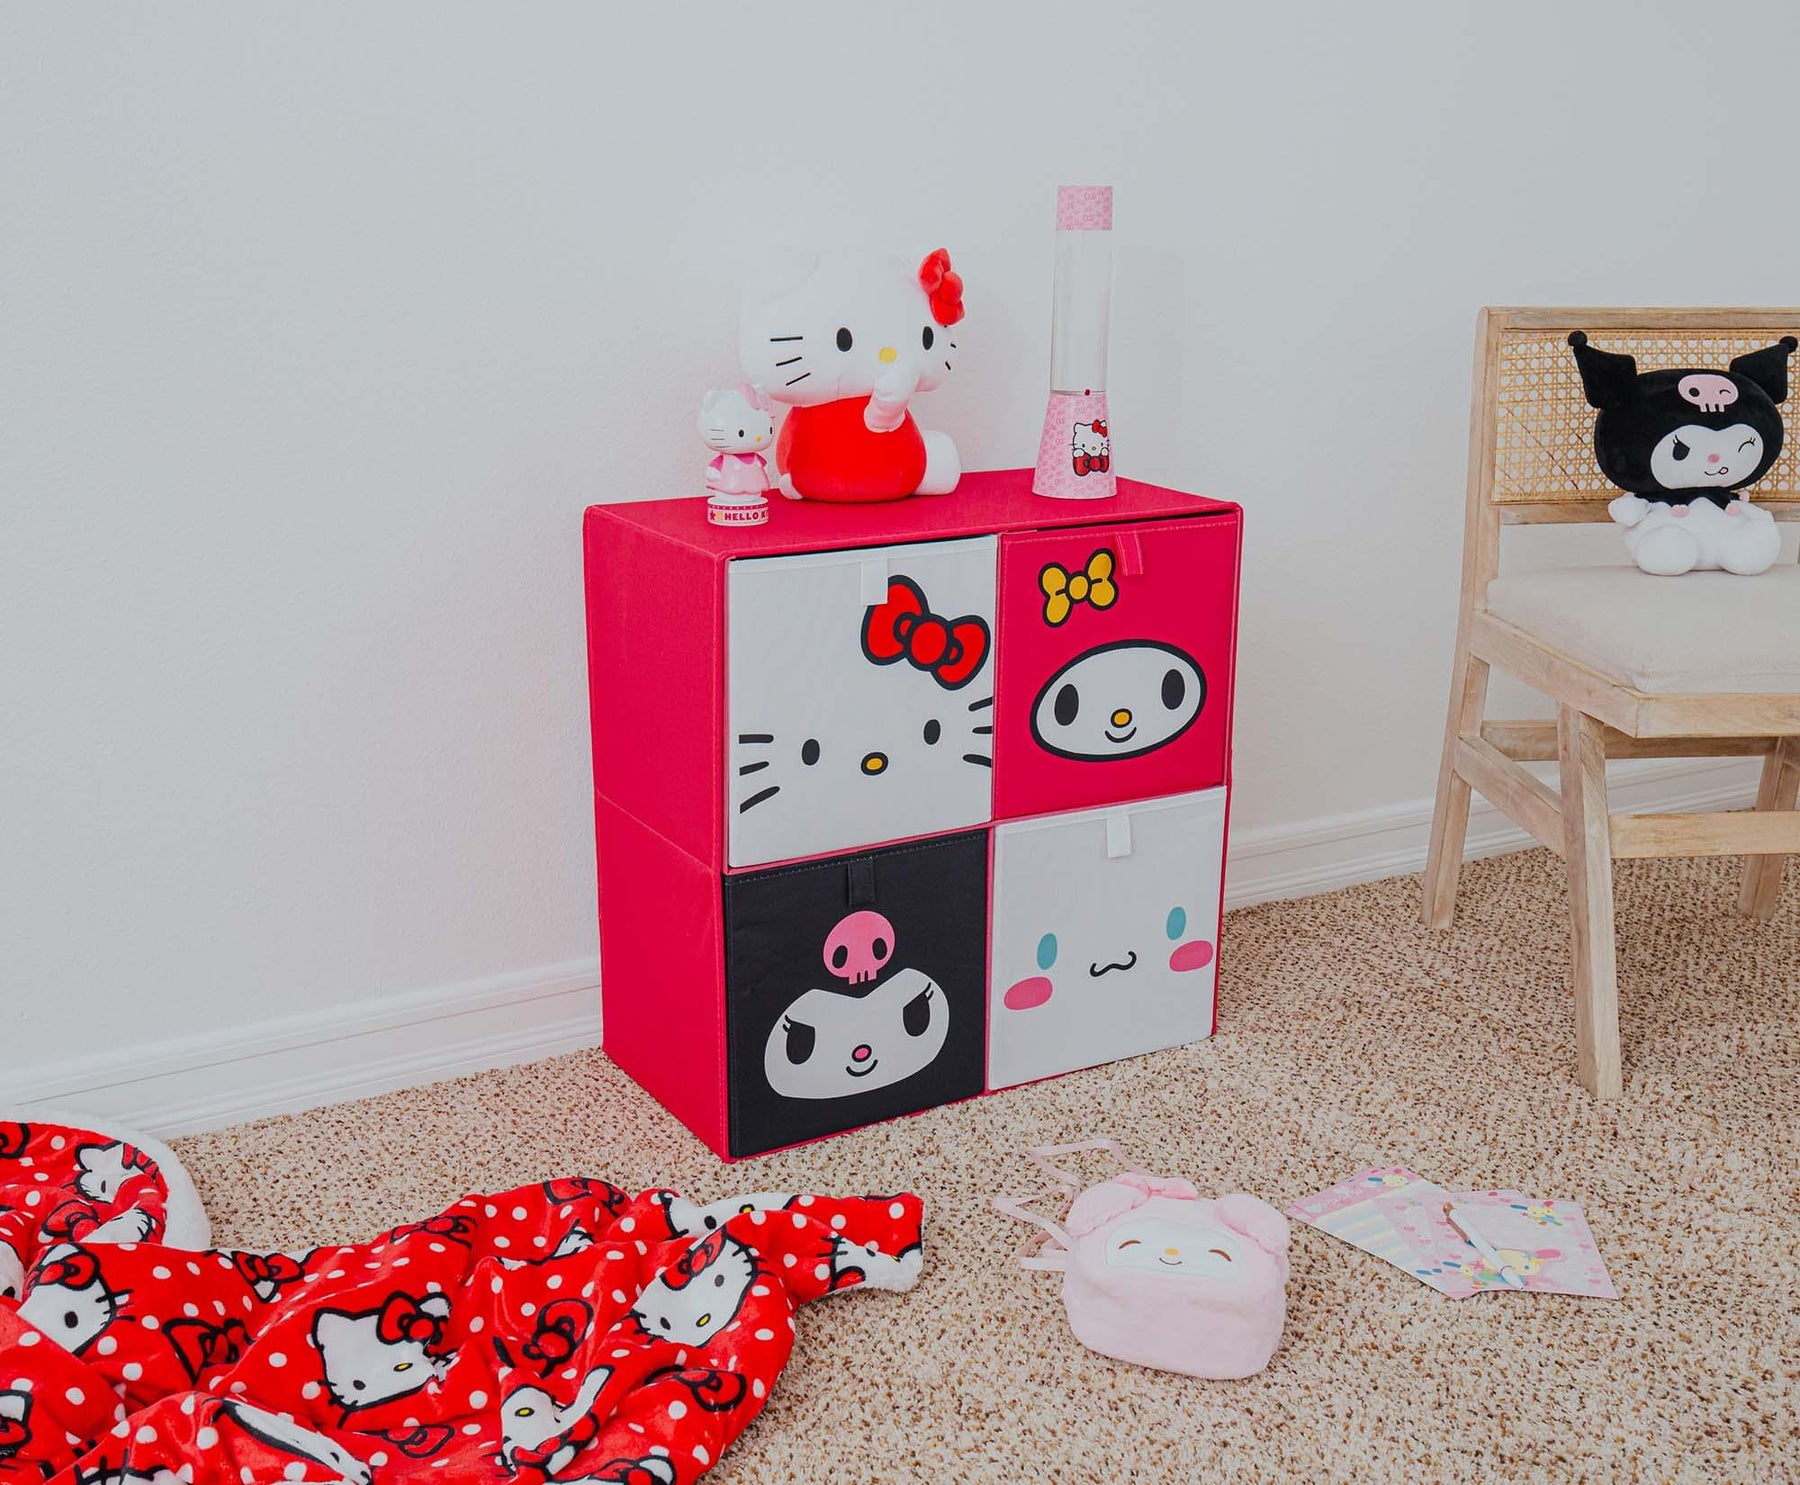 Sanrio Hello Kitty and Friends 11-Inch Storage Bins | Set of 4